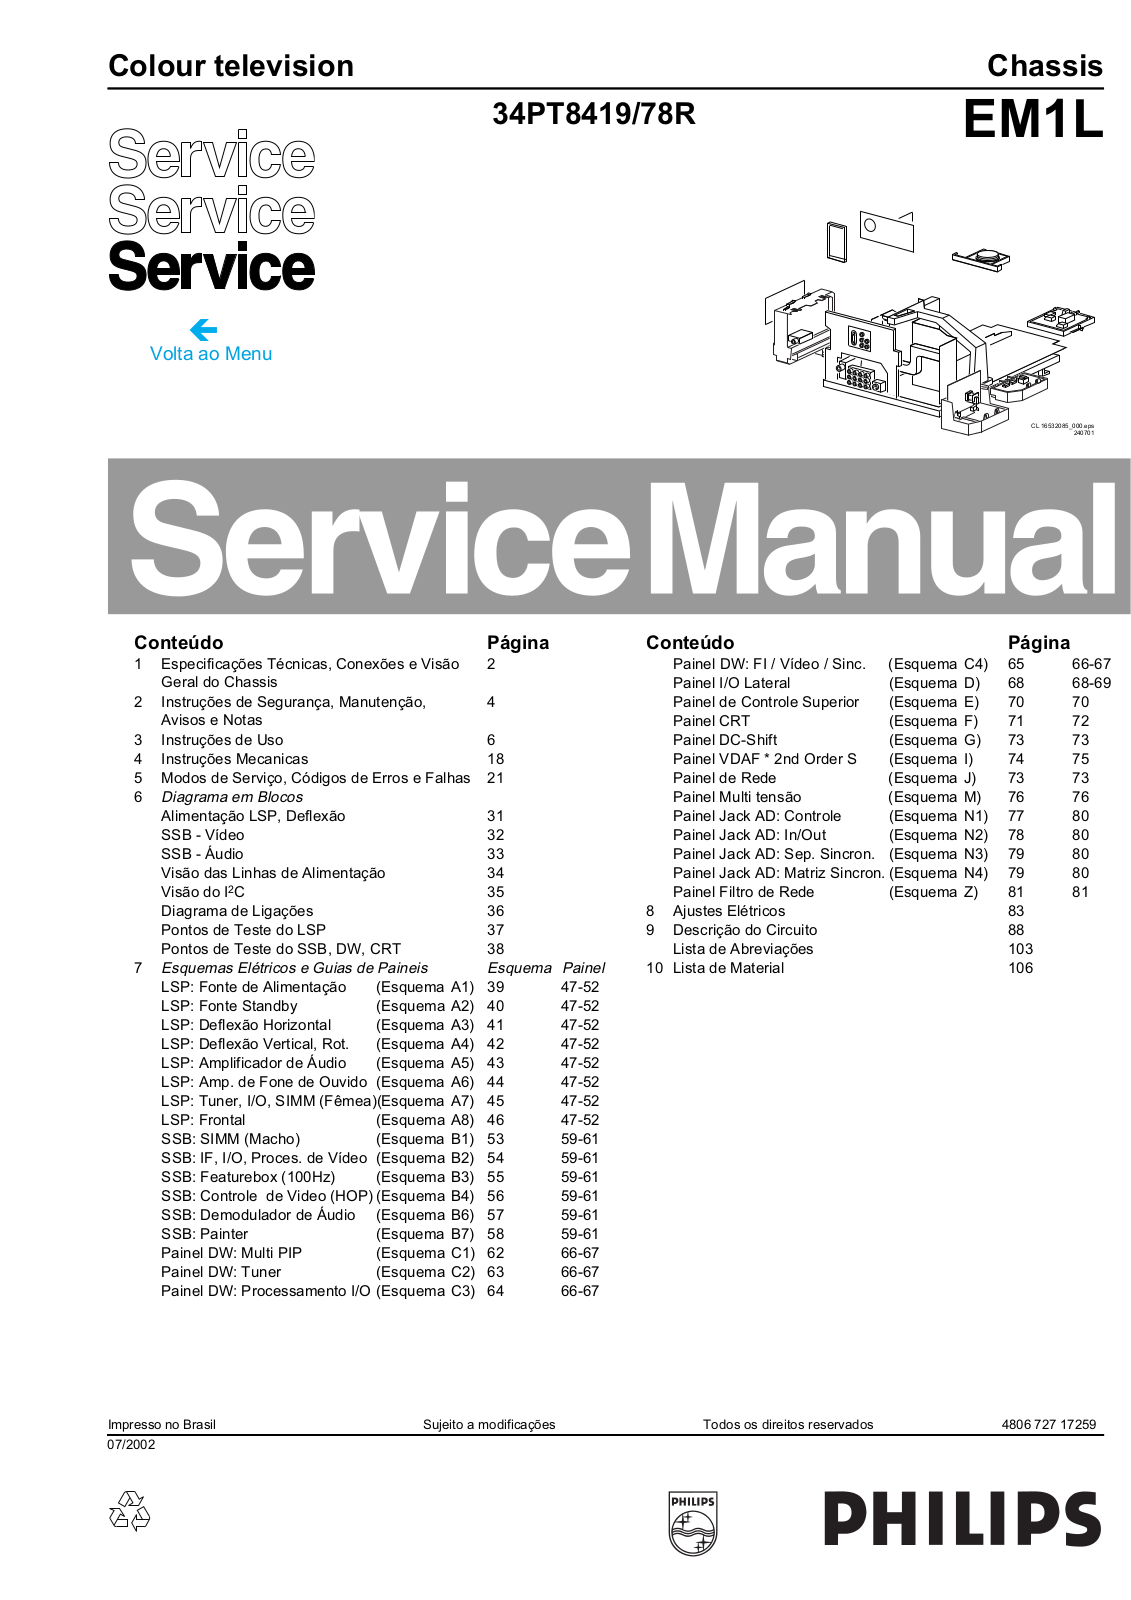 Philips EM1L Service Manual